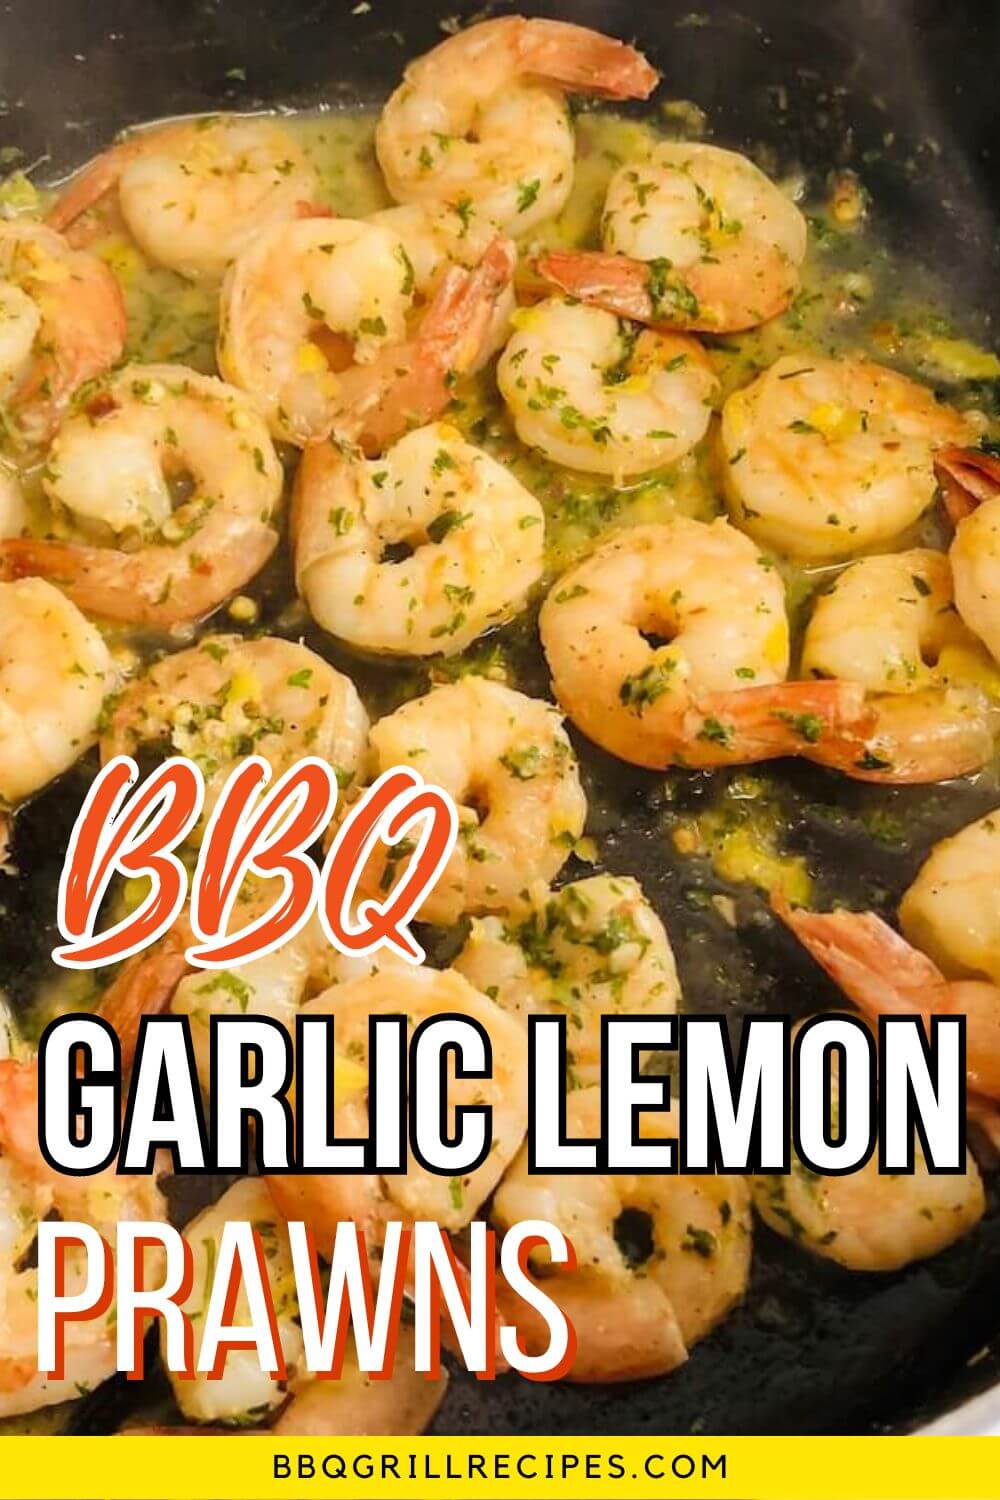 pinterest image - text reads BBQ garlic lemon prawns.